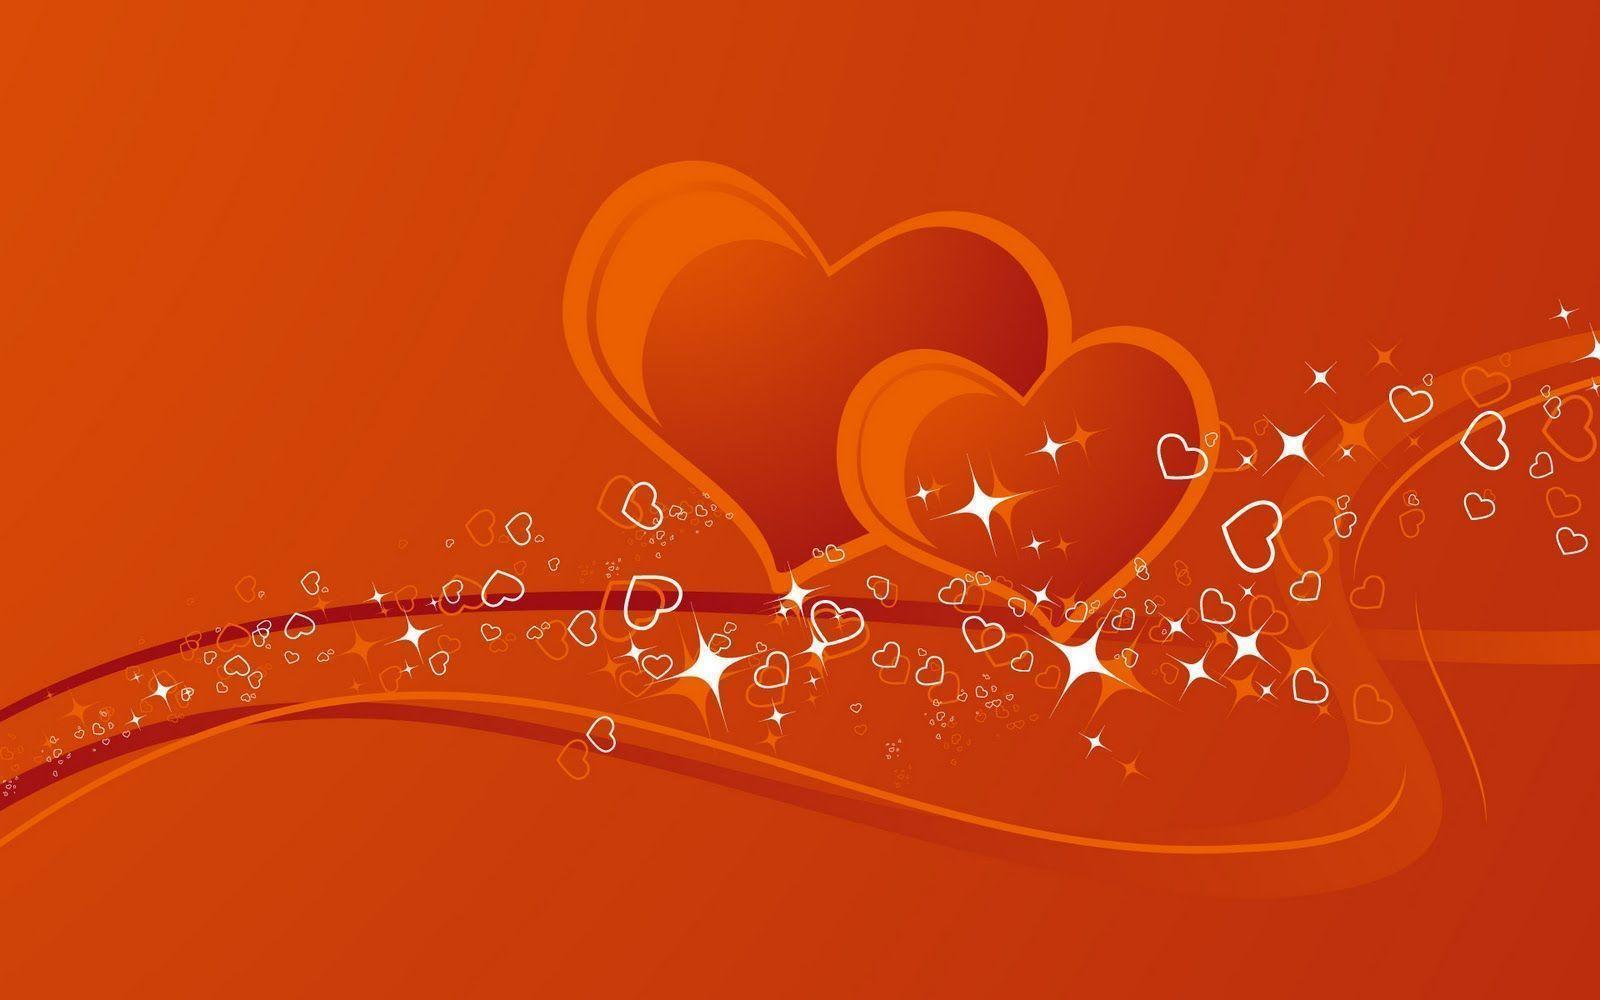 Valentine 55 124029 Image HD Wallpaper. Wallfoy.com